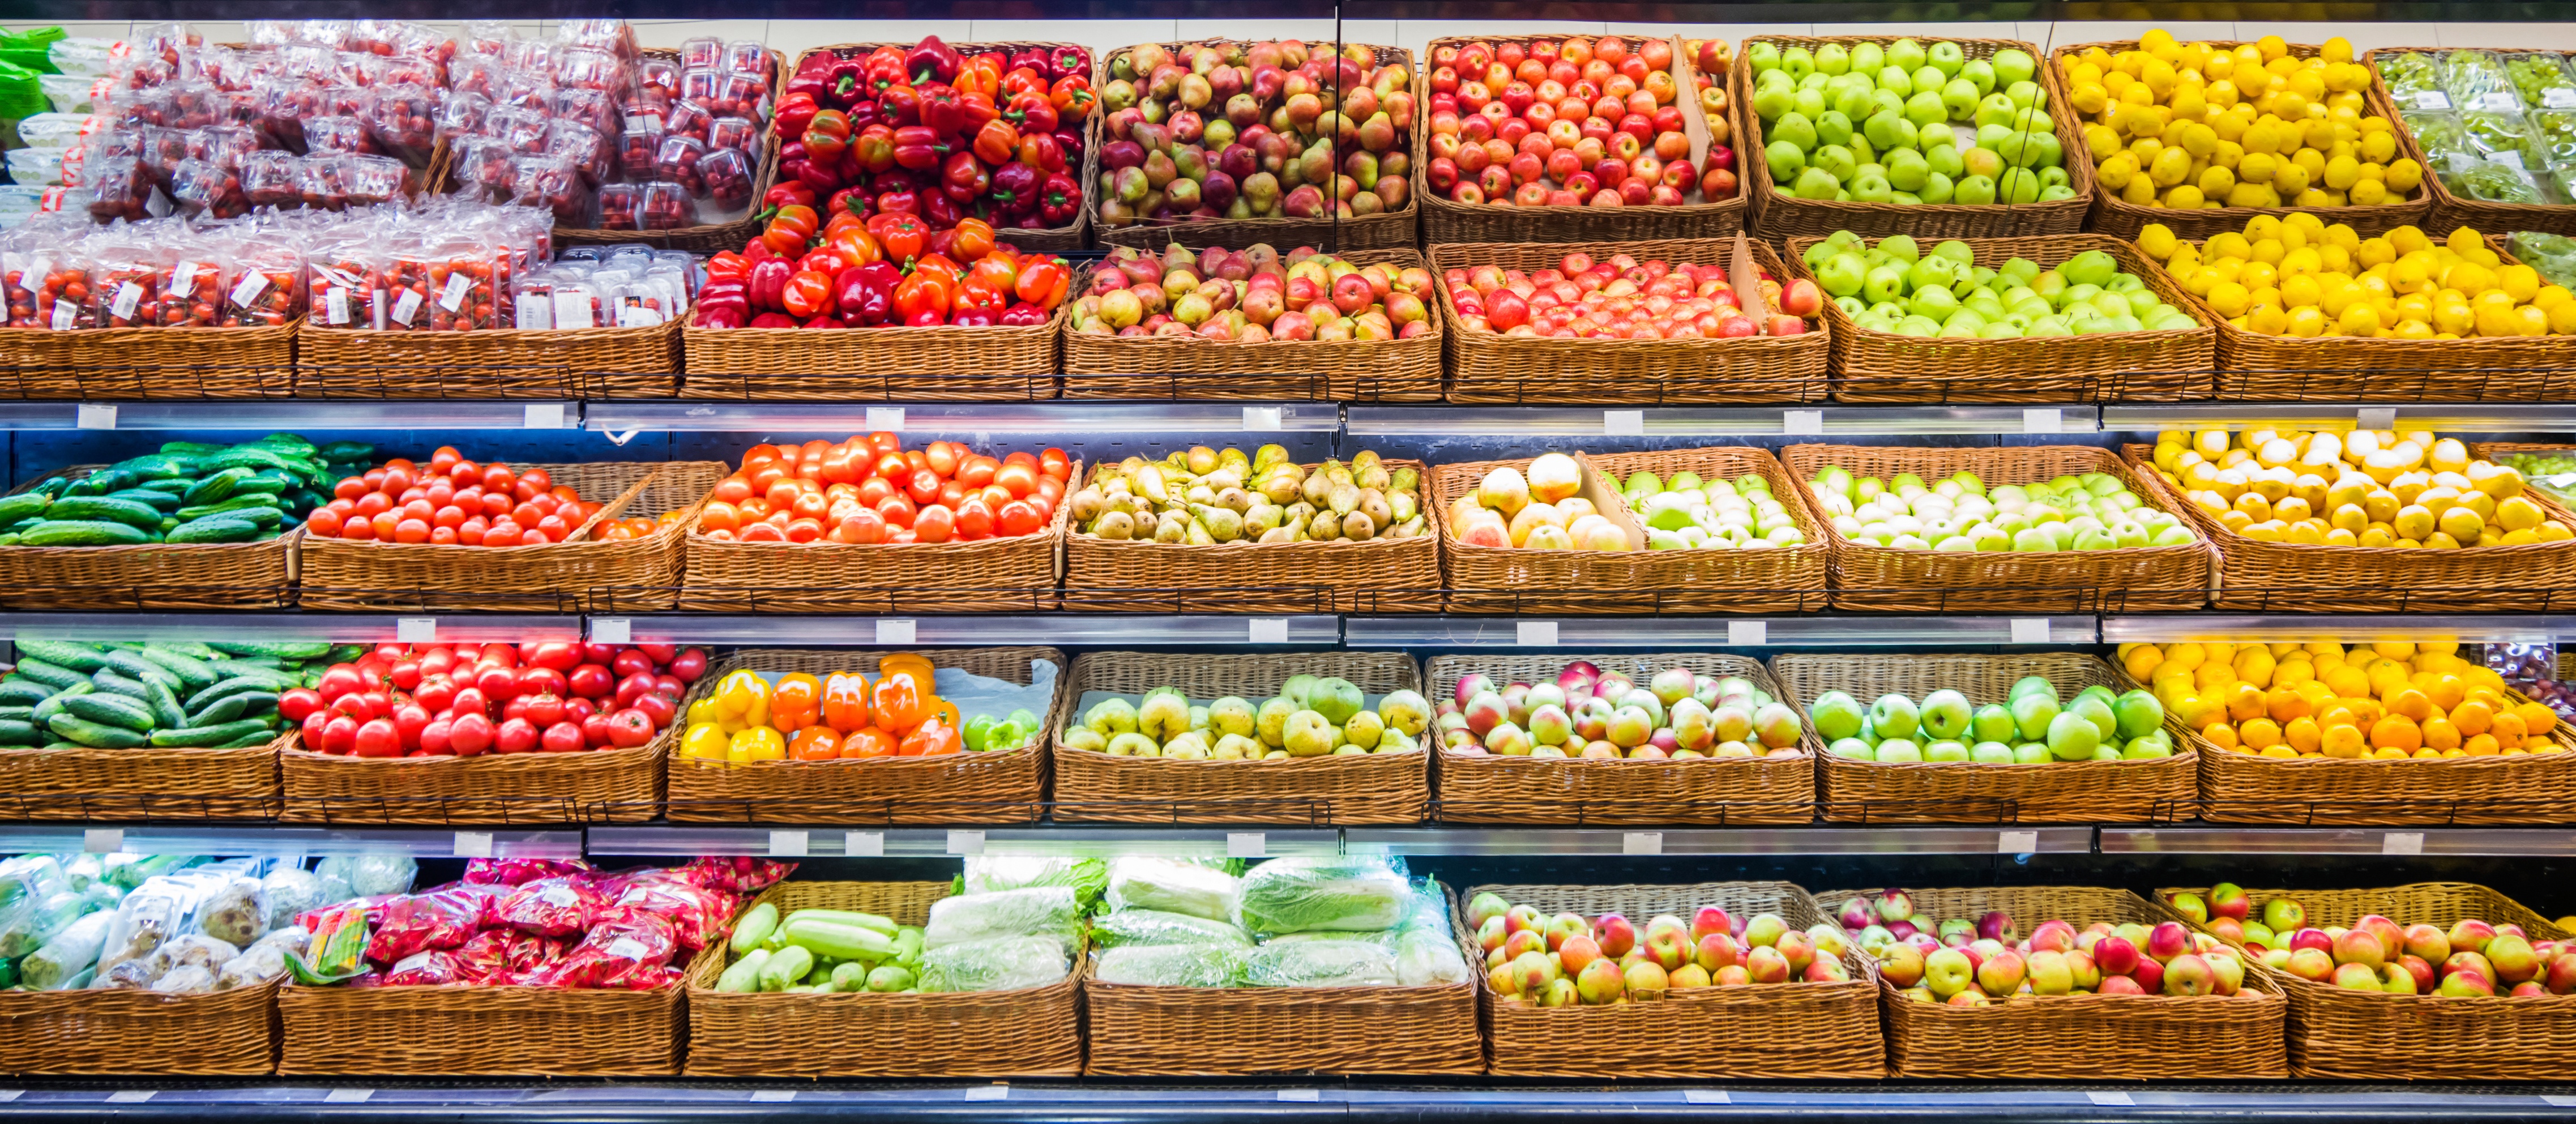 Fresh fruits and vegetables on shelf in market